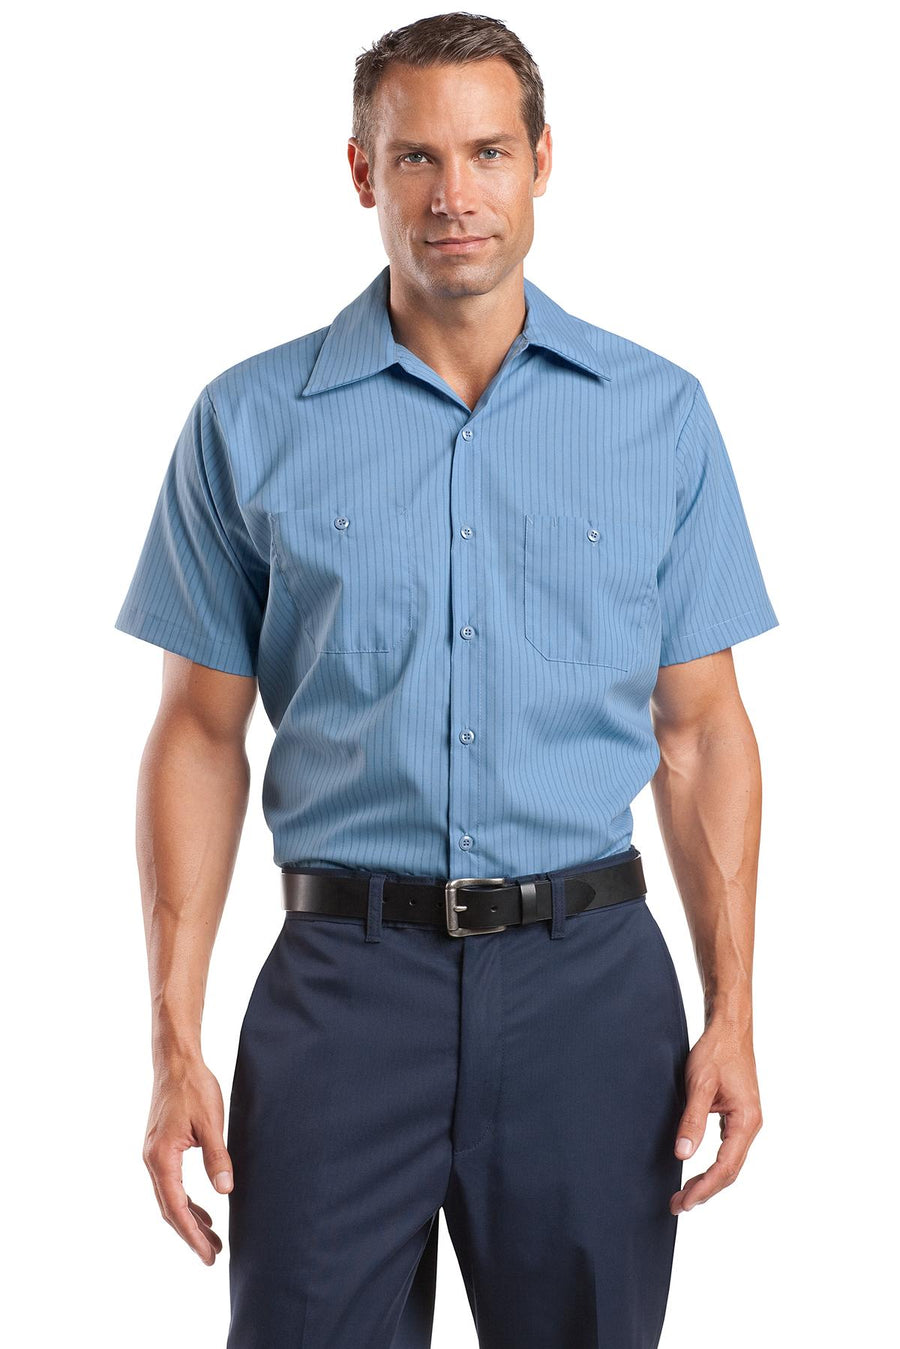 Red Kap Long Size Short Sleeve Striped Industrial Work Shirt.